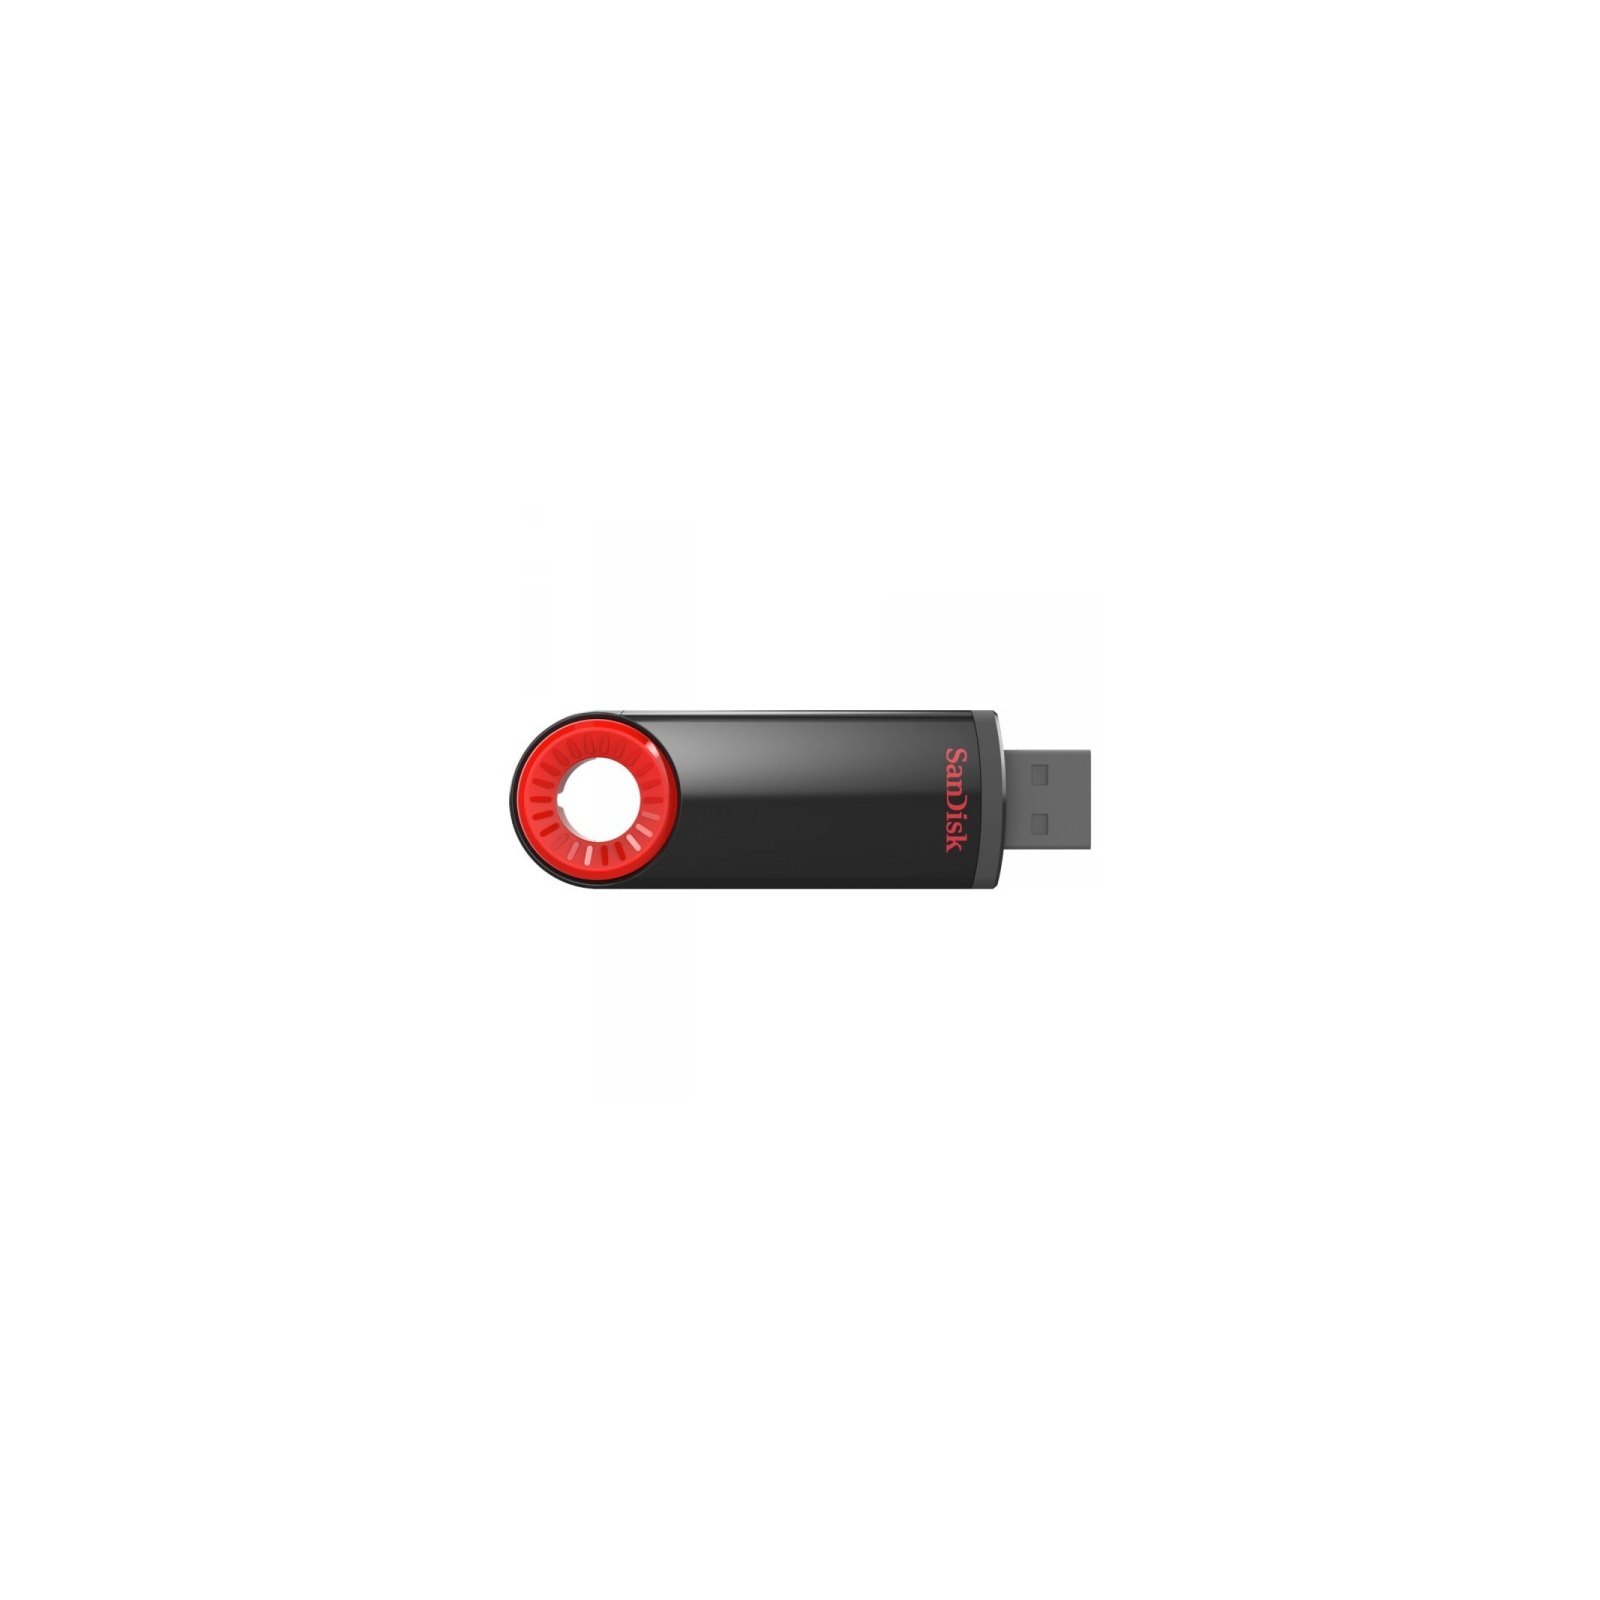 USB флеш накопитель SanDisk 64GB Cruzer Dial USB 2.0 (SDCZ57-064G-B35) изображение 5